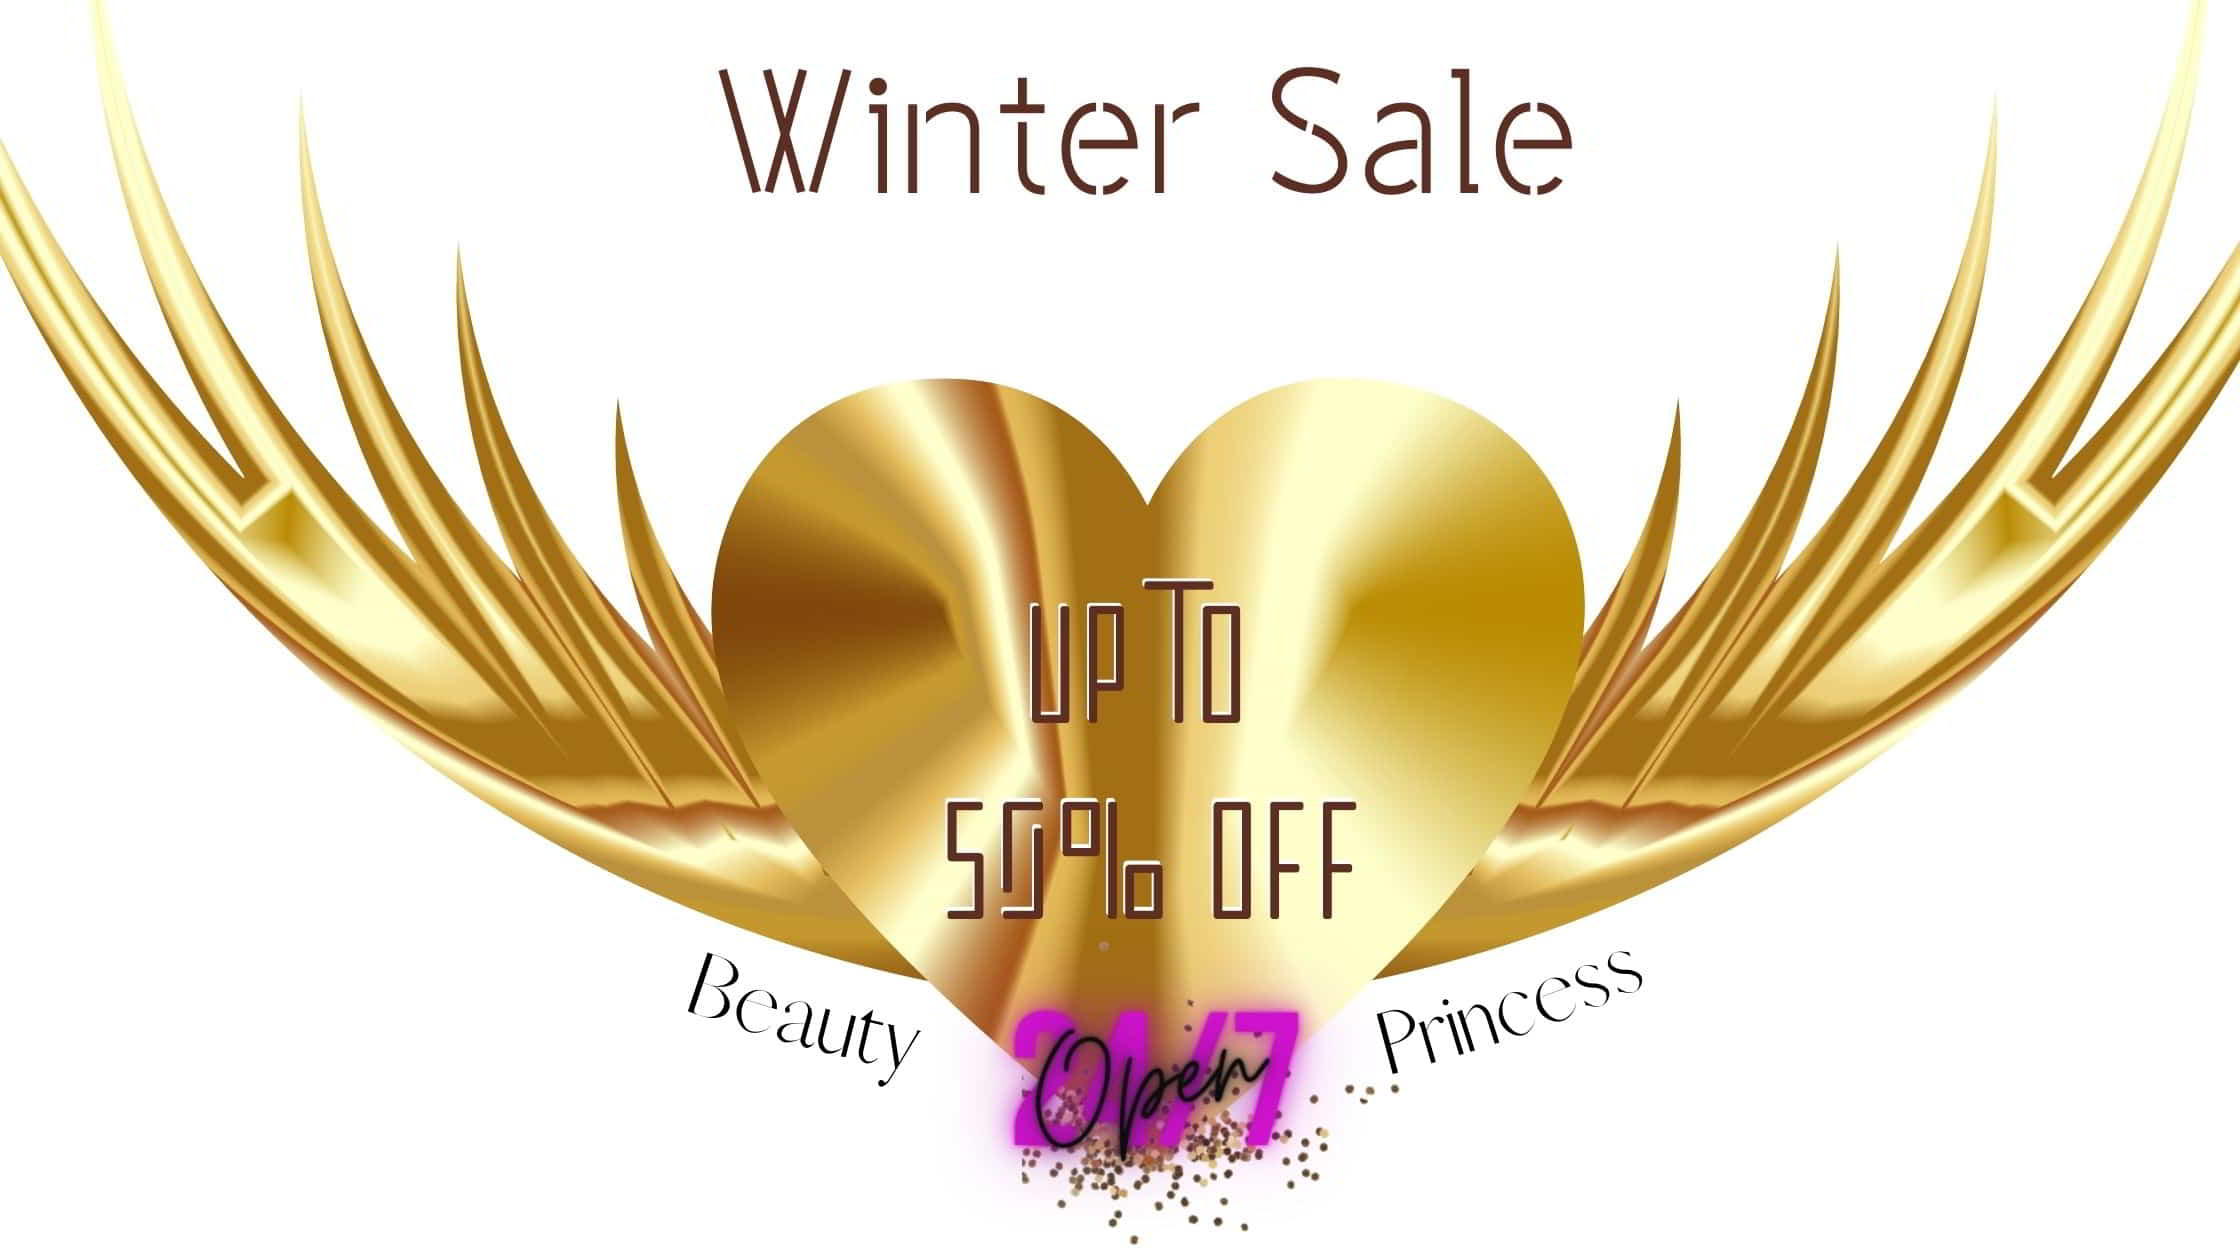 Winter discounts over 50%. Large golden heart in the center of the photo and in the center of the heart is written the discount rate of the cosmetics.